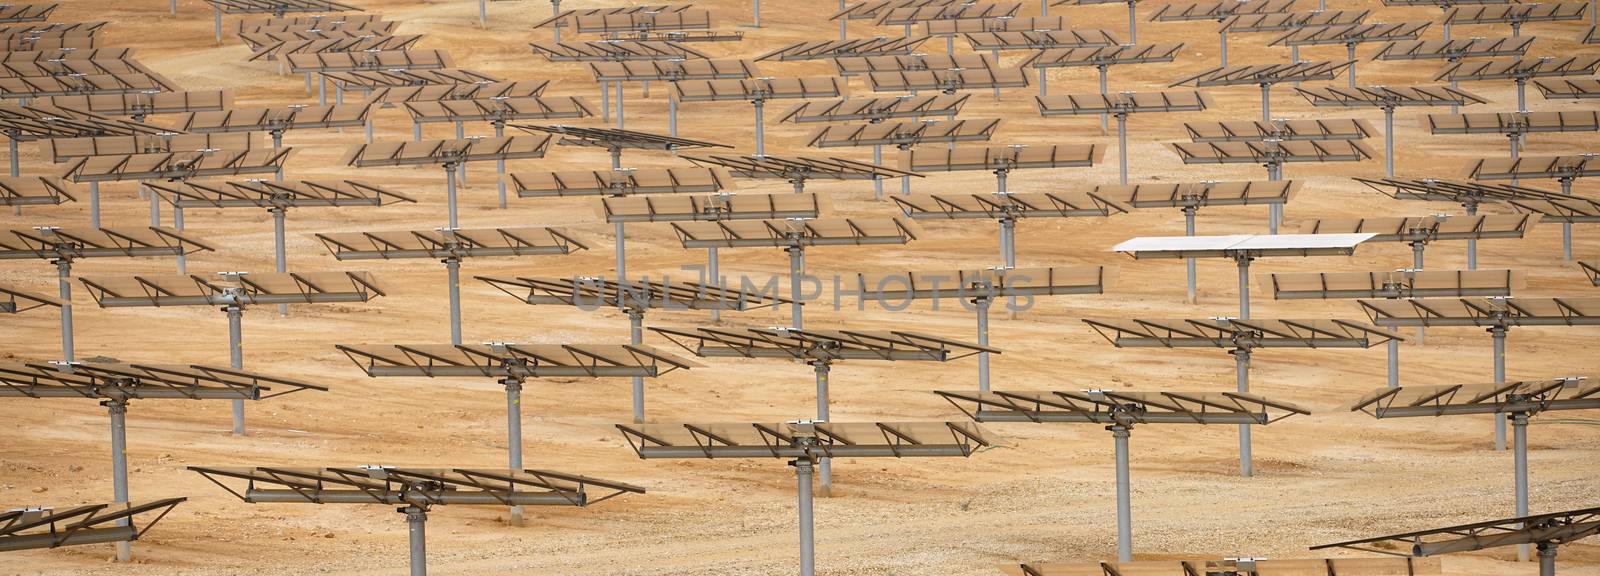 industrial landscape solar batteries in the desert by MegaArt